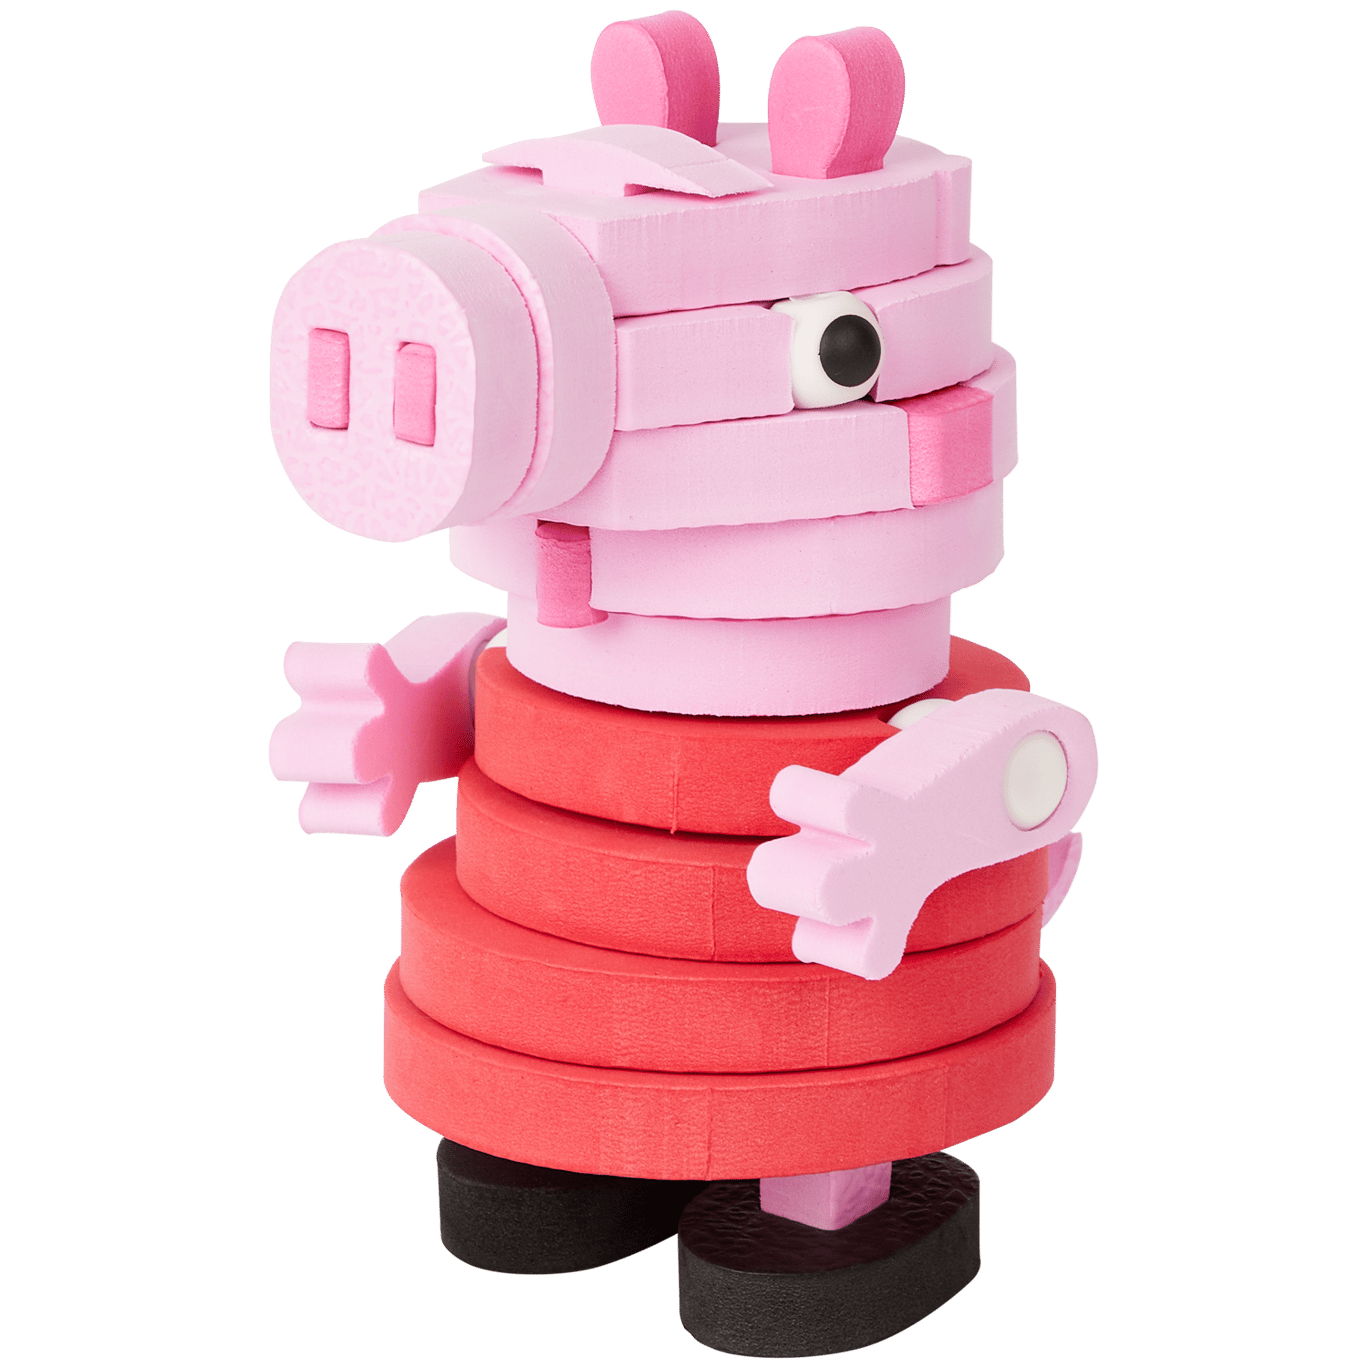 Puzzle 3D Peppa Pig